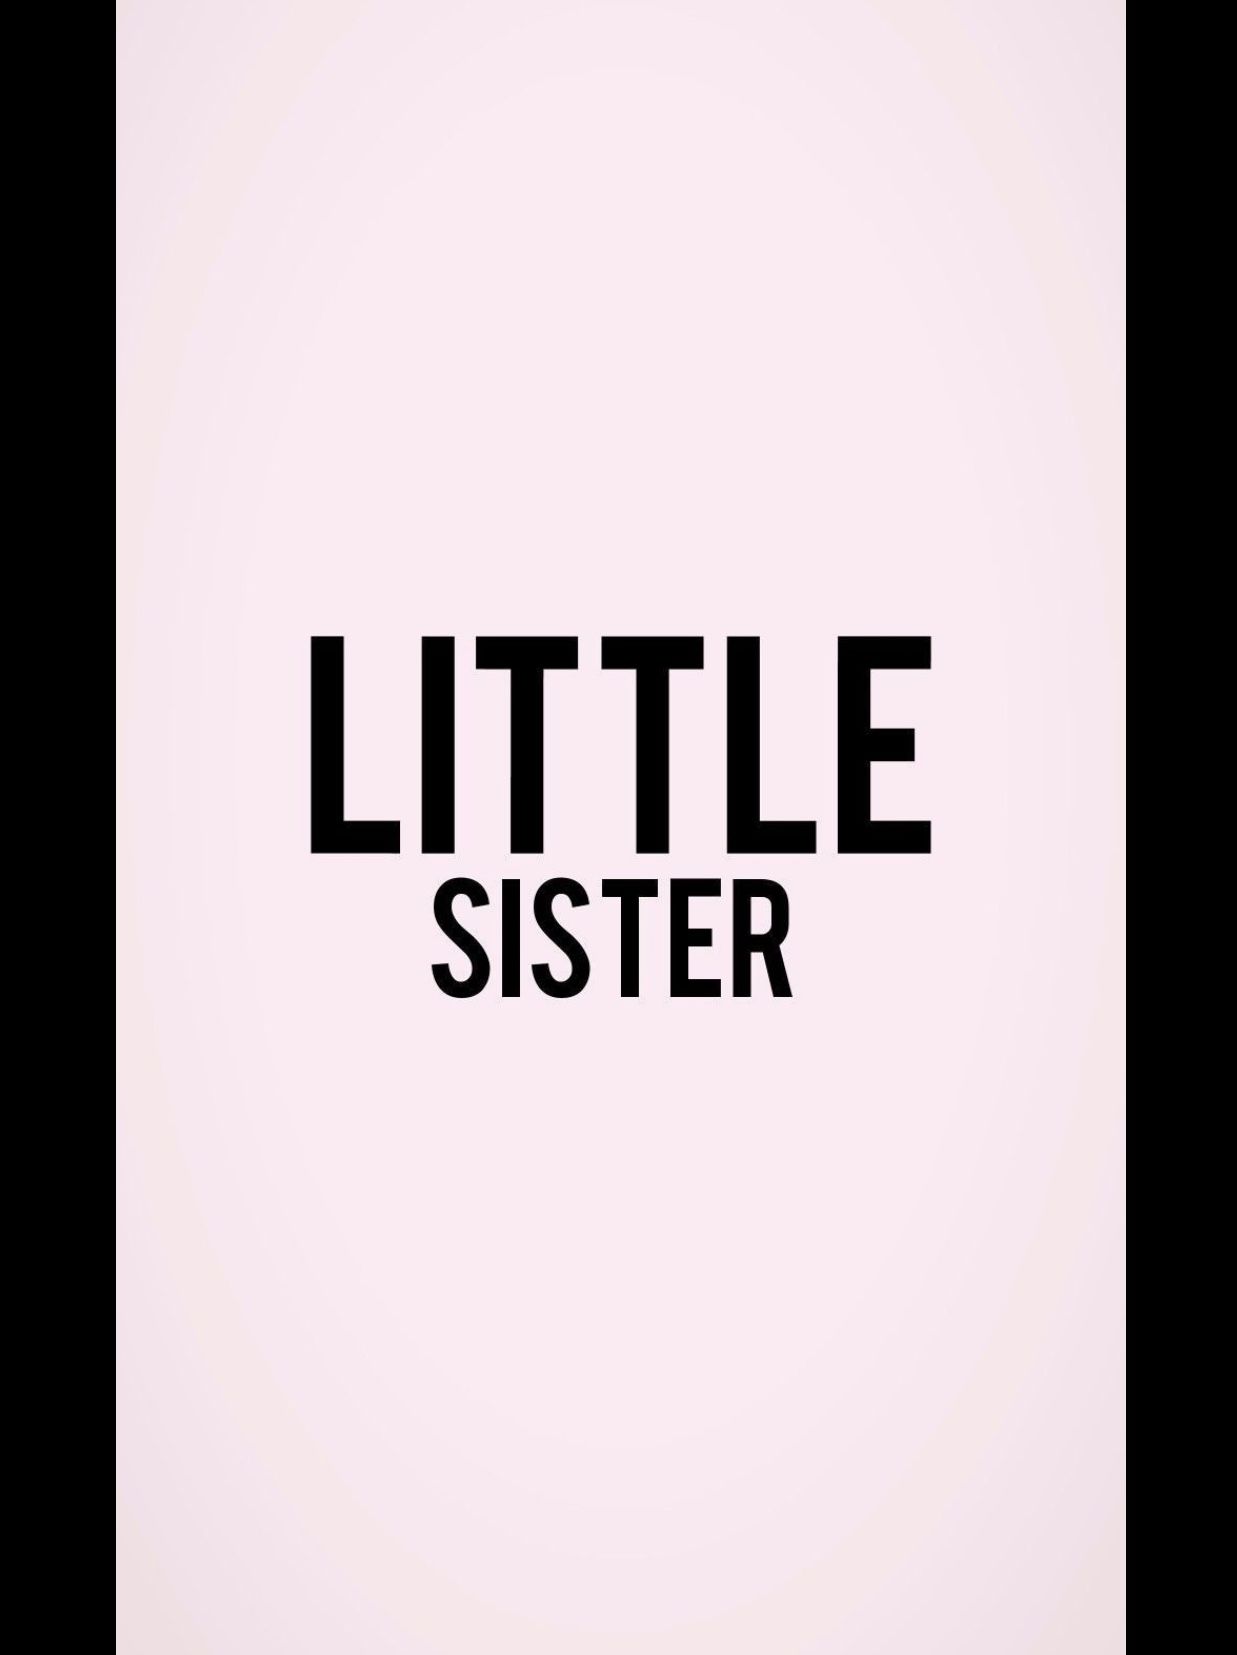 Little Sister. Sister wallpaper, Sisters drawing, Matching wallpaper